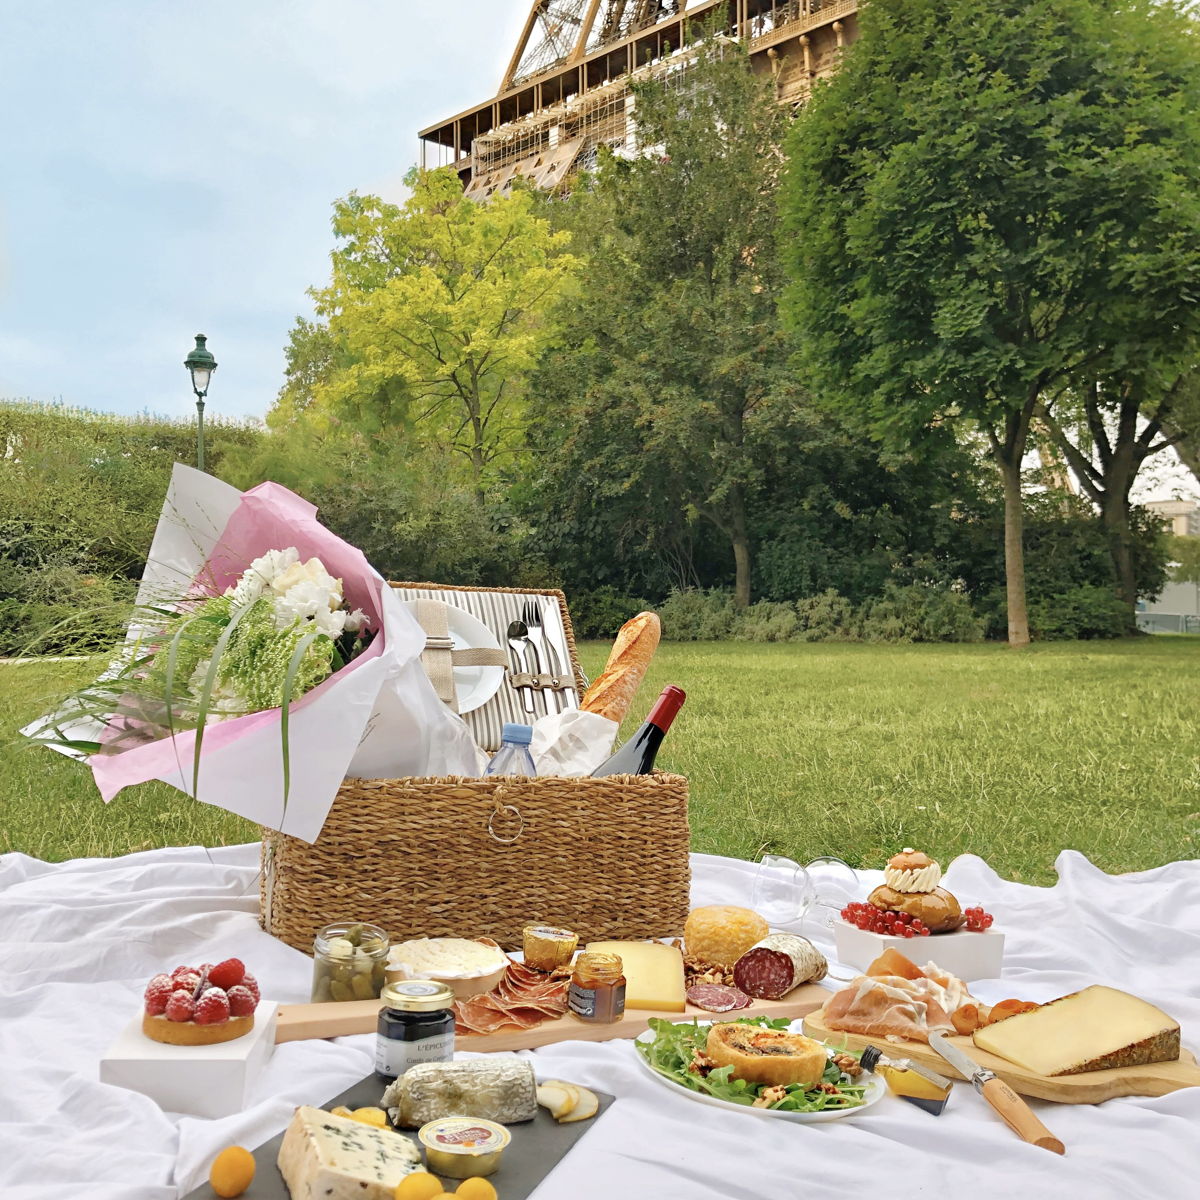 My Parisian picnic